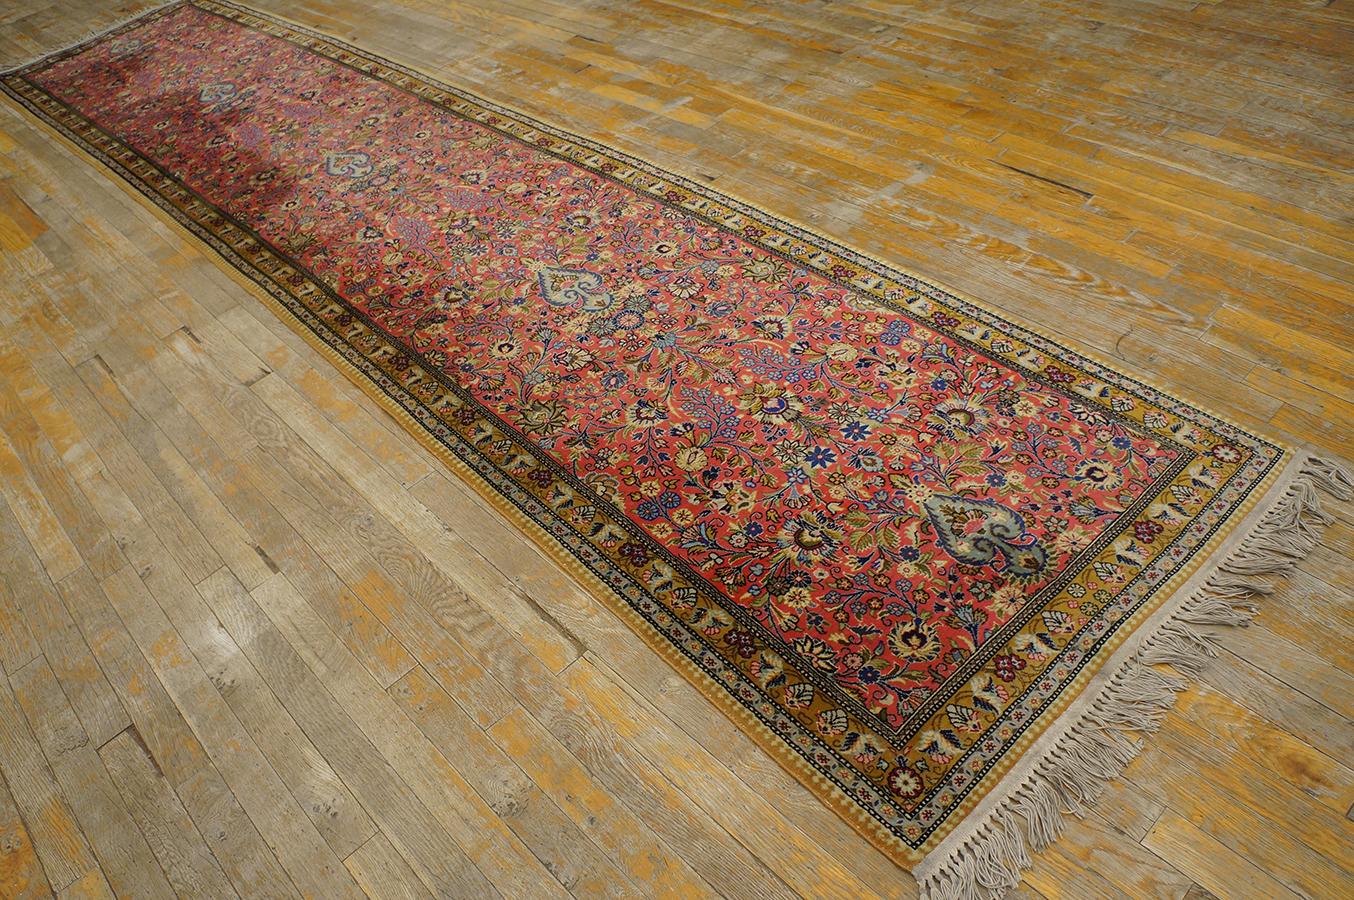 Antique Persian Tabriz rug, size: 2' 10'' x 13' 3''.